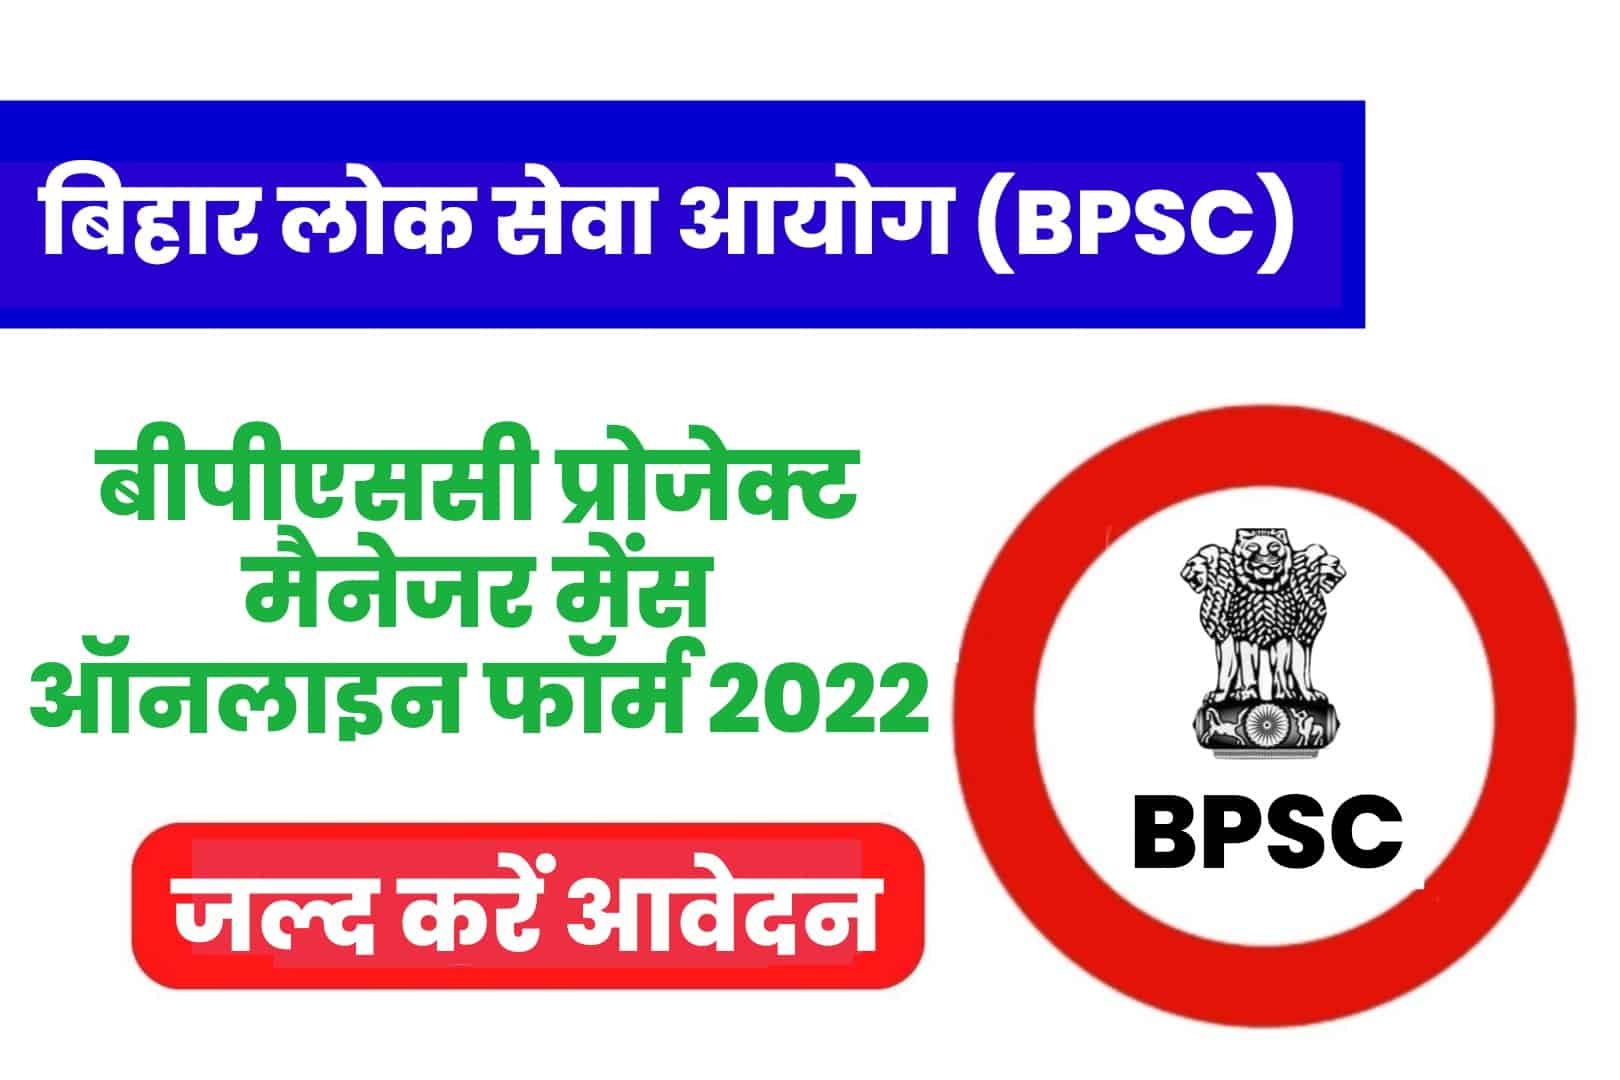 BPSC Project Manager Main Online Form 2022 | बीपीएससी प्रोजेक्ट मैनेजर मेंस ऑनलाइन फॉर्म 2022